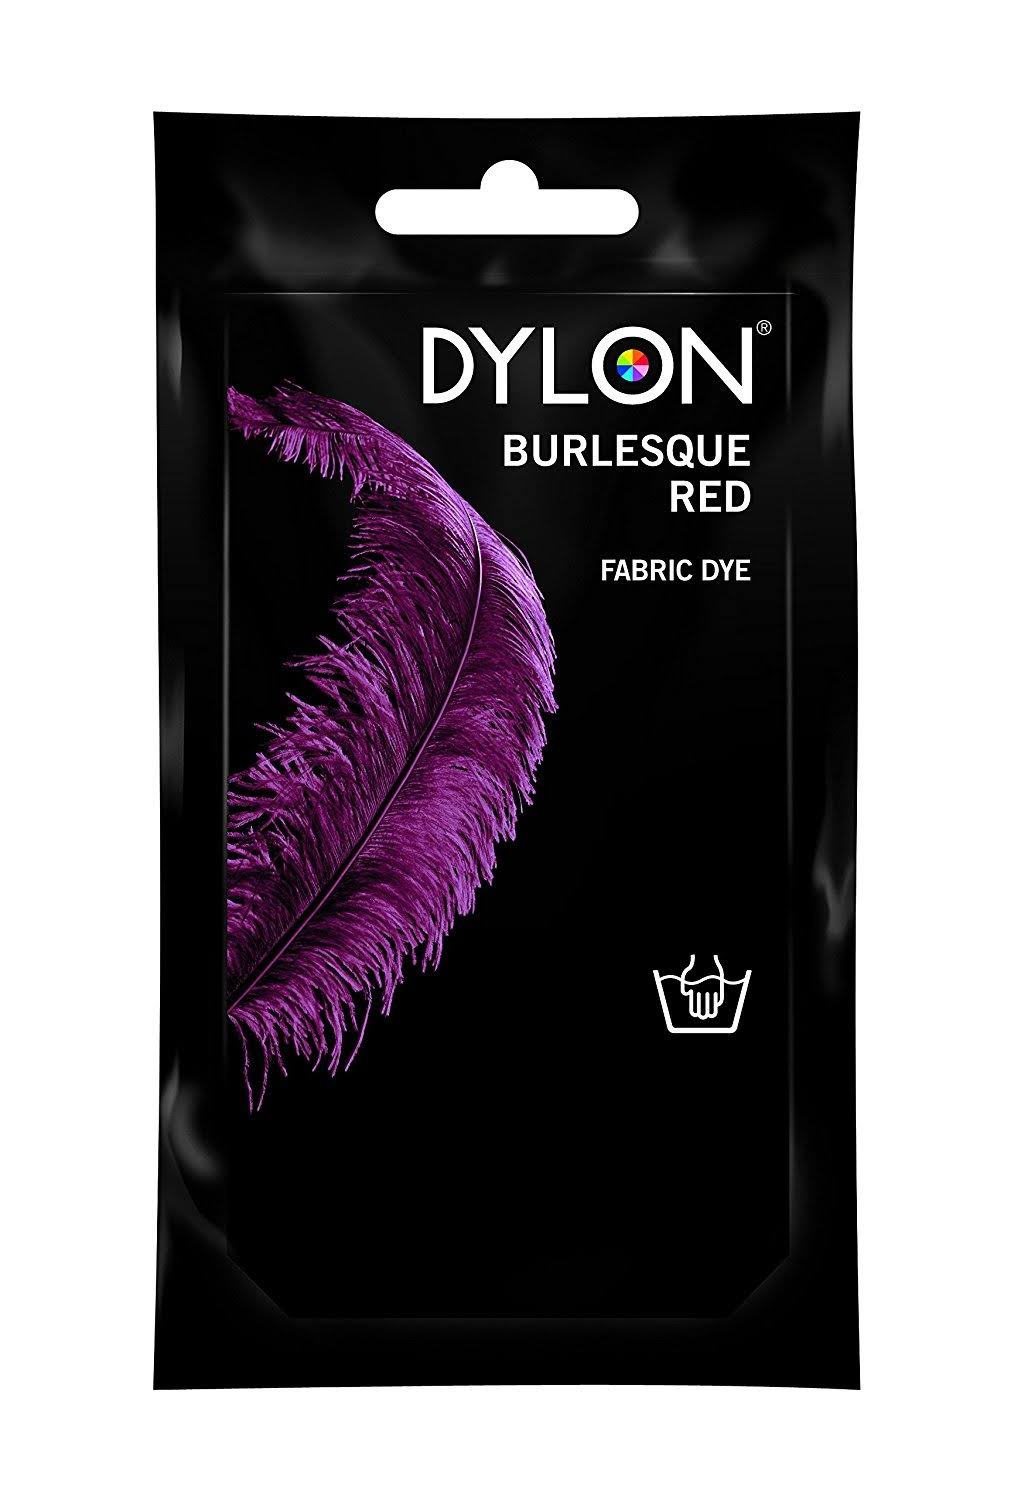 Dylon Burlesque Red Hand Wash Fabric Dye